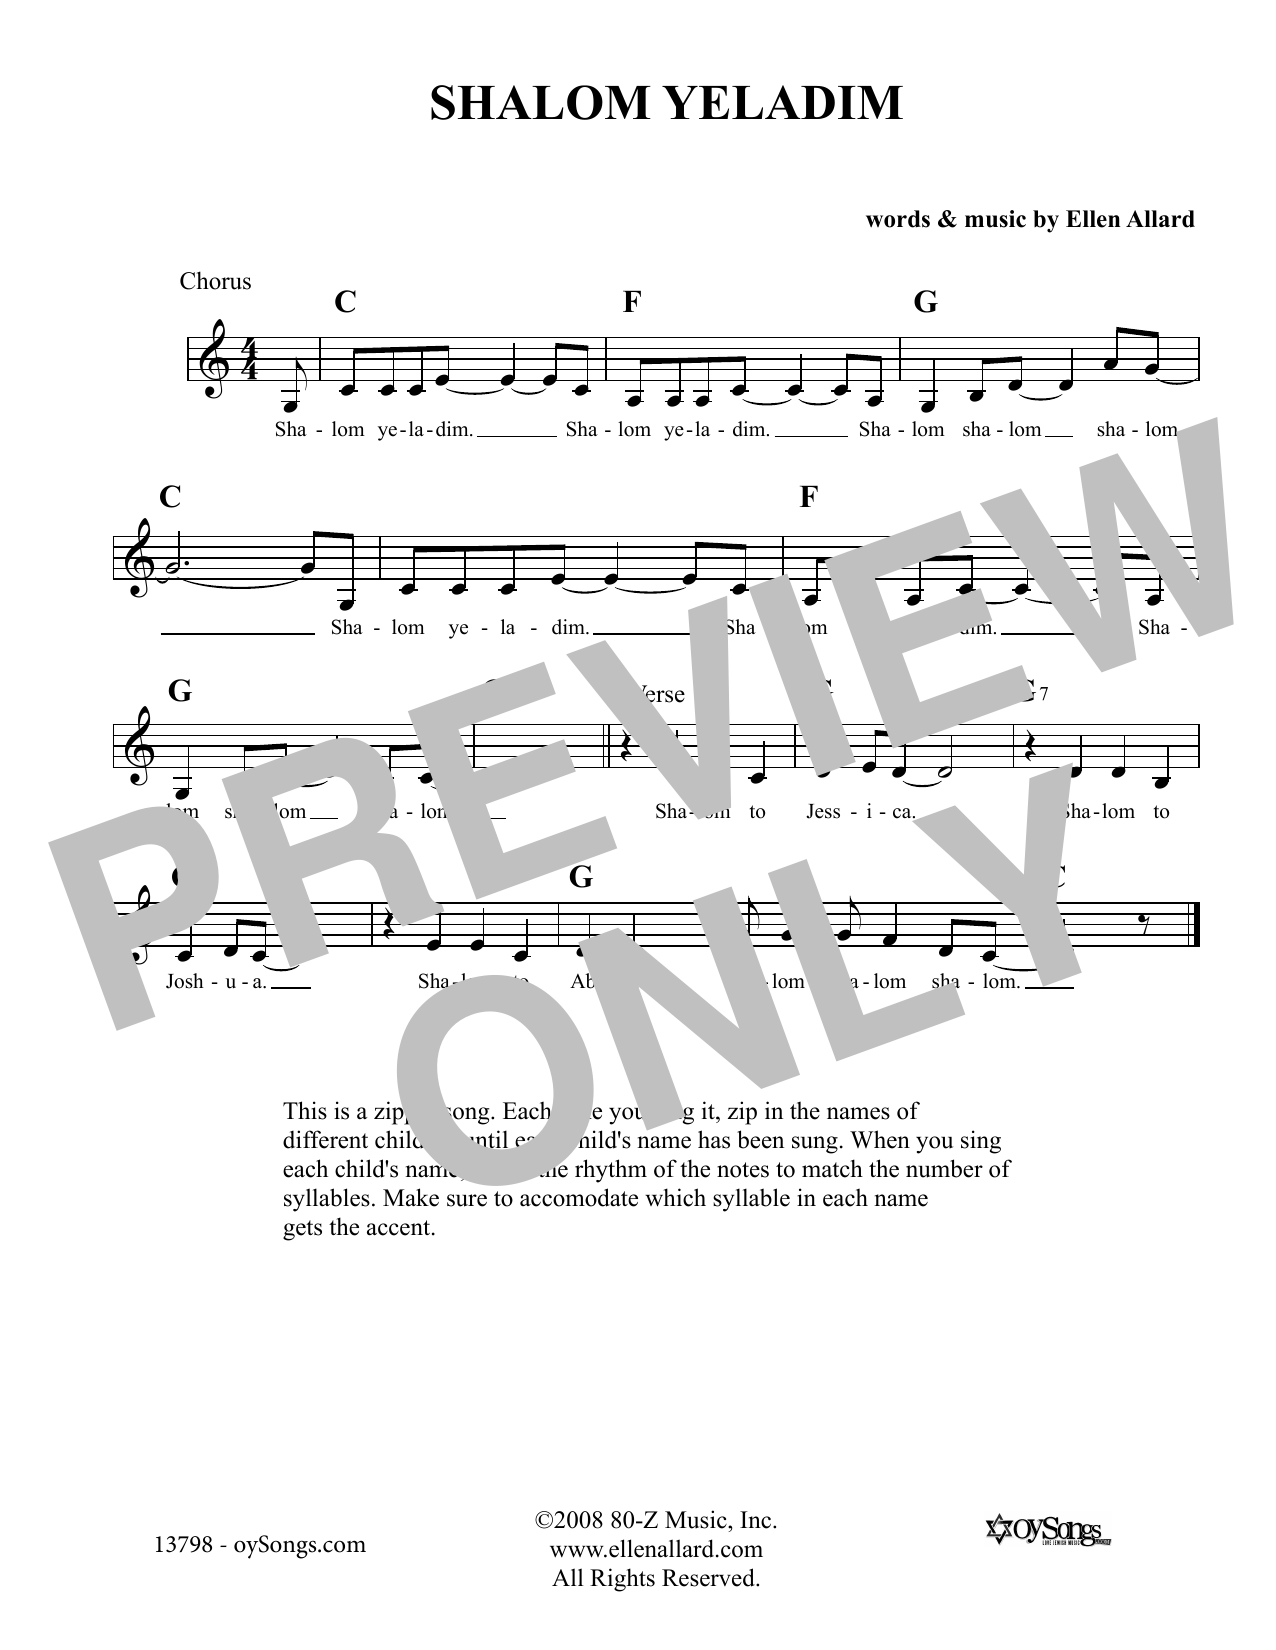 Download Ellen Allard Shalom Yeladim Sheet Music and learn how to play Melody Line, Lyrics & Chords PDF digital score in minutes